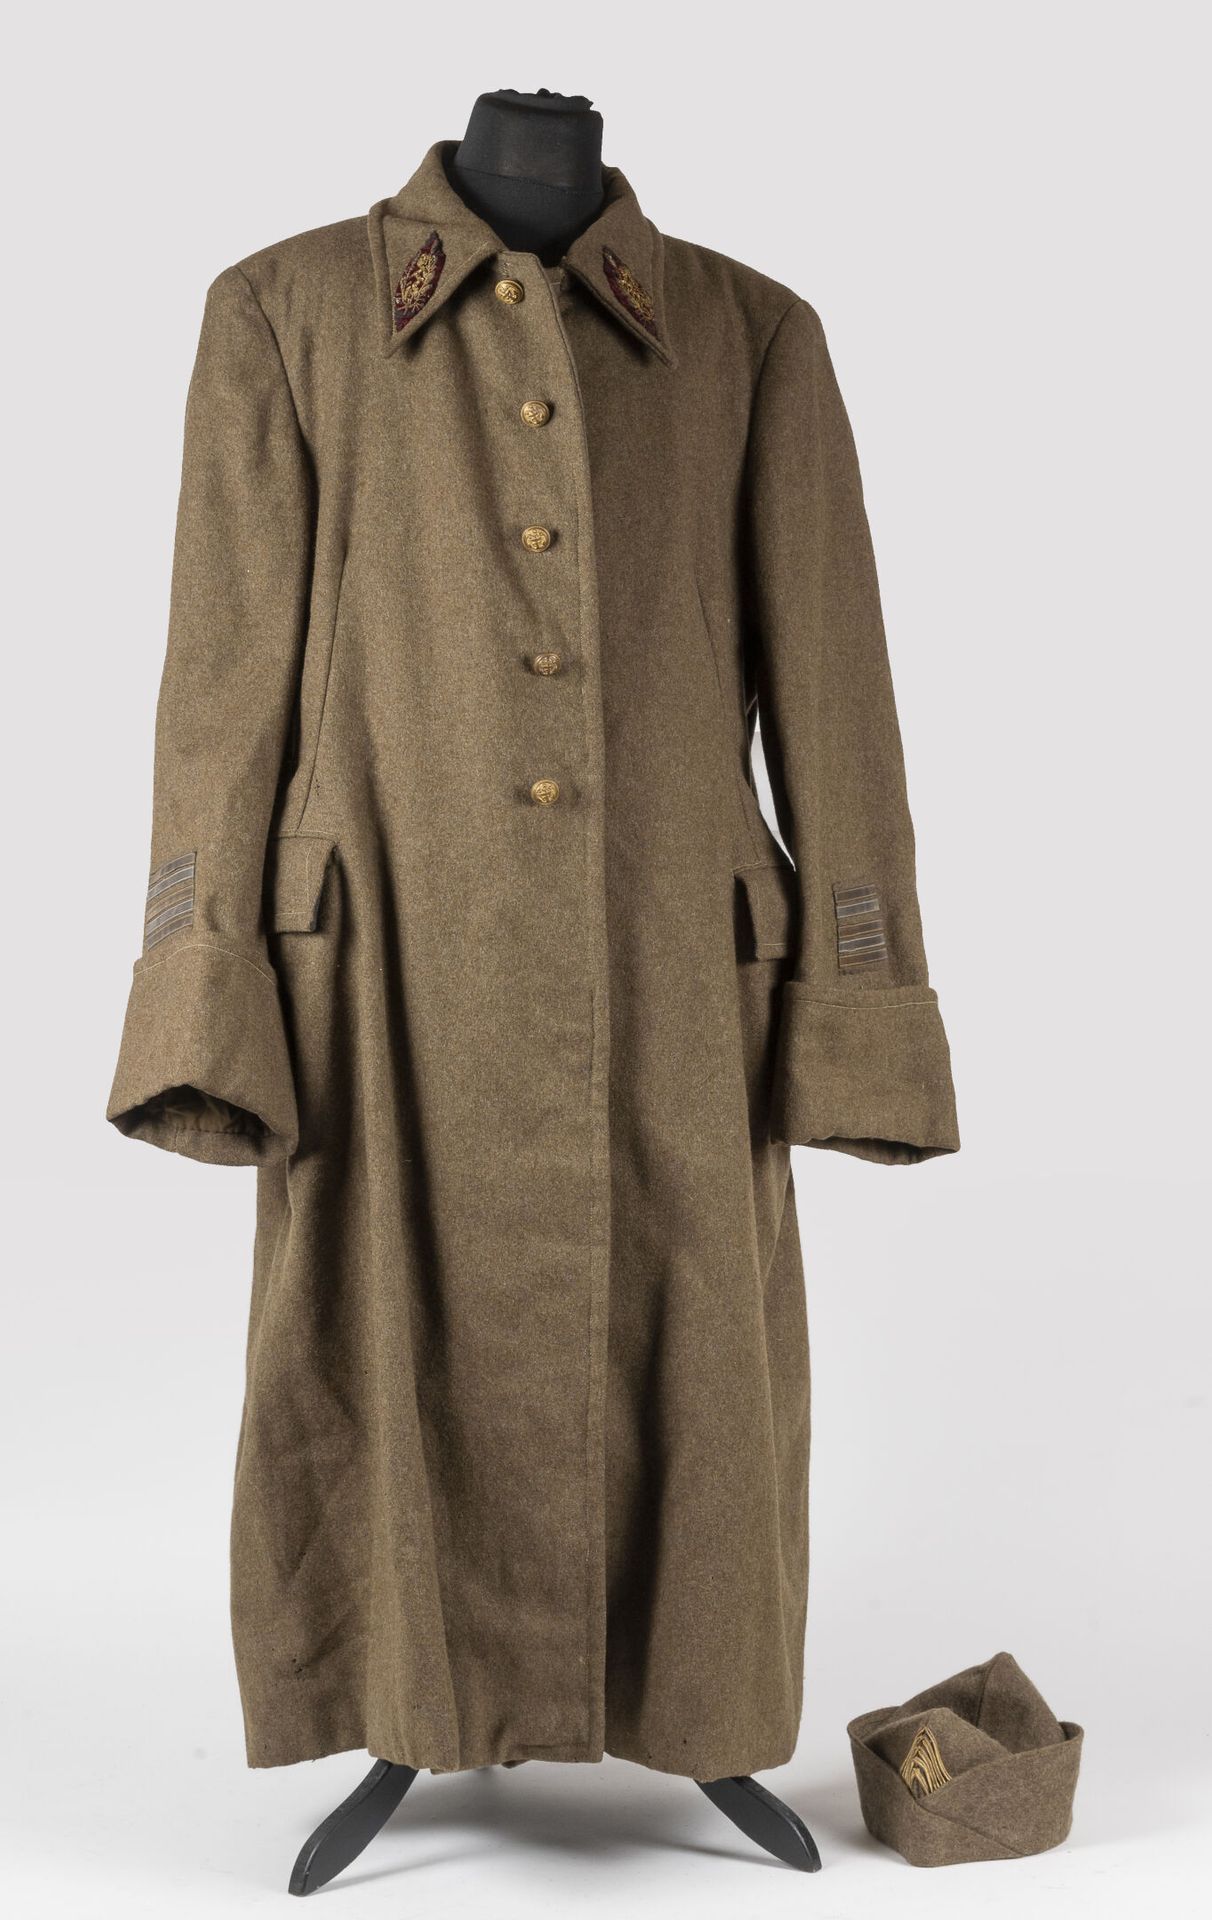 Null 卫生部门中校的外套和上校的警帽。

1940s.